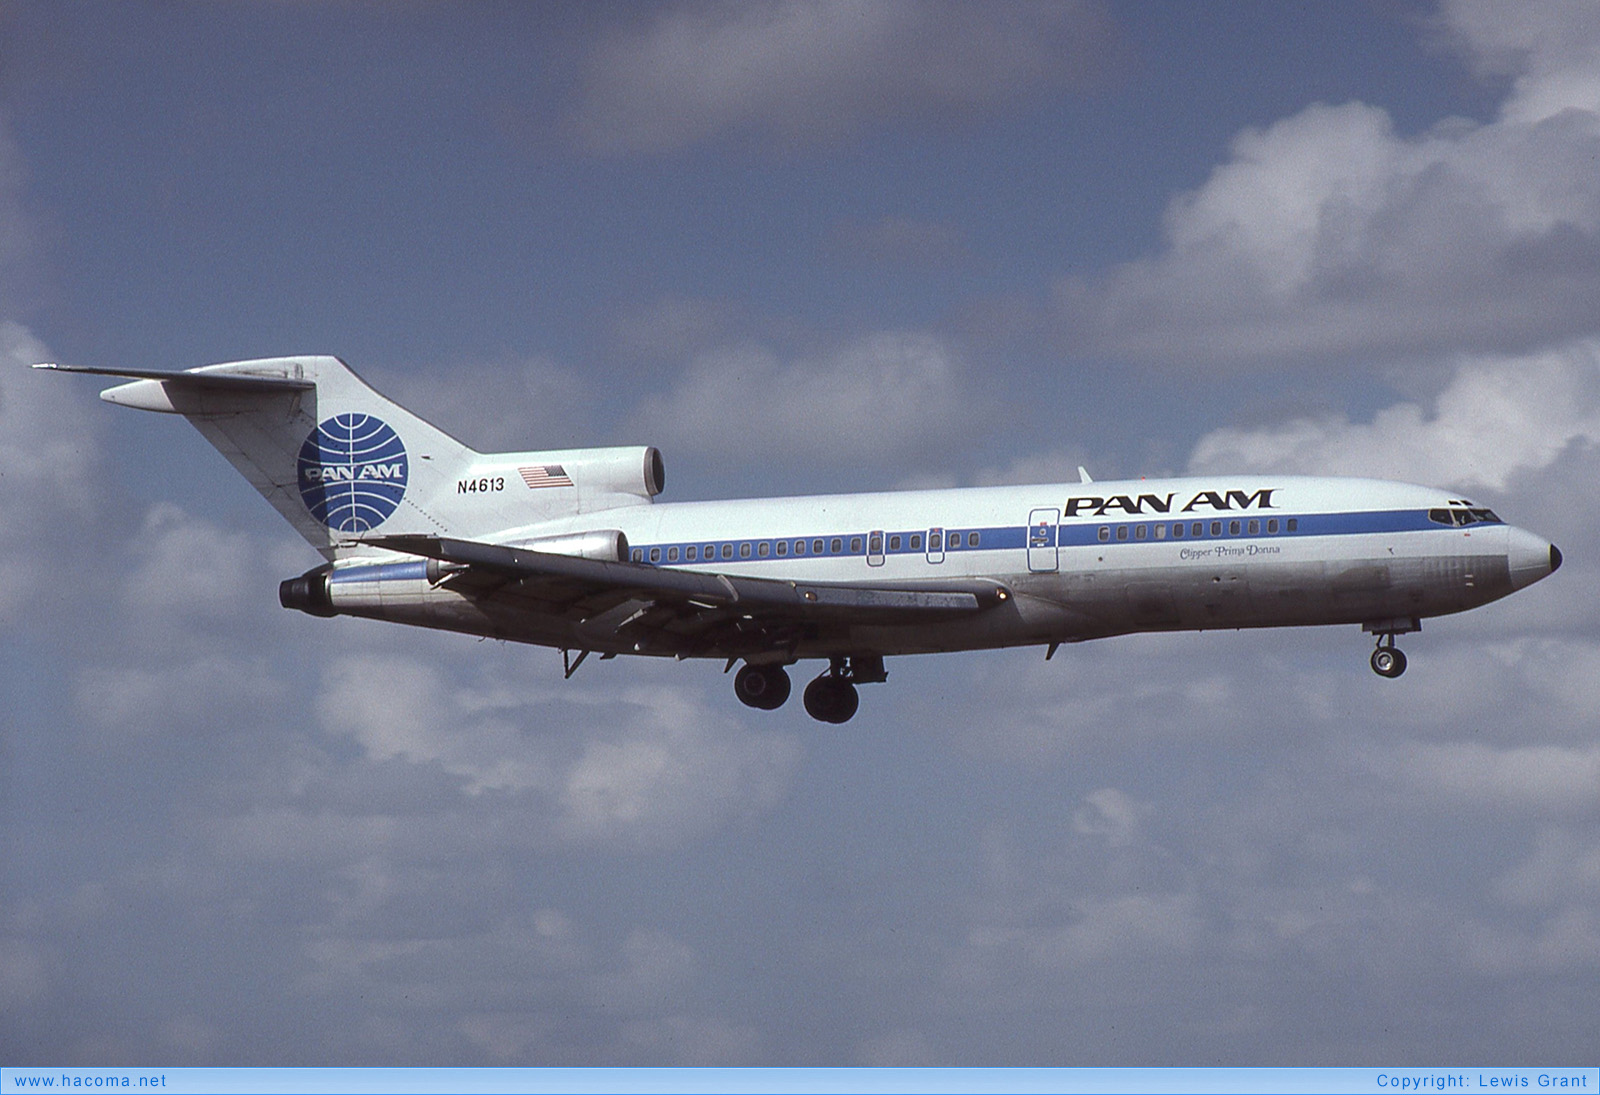 Photo of N4613 - Pan Am Clipper Prima Donna - Miami International Airport - Mar 31, 1982